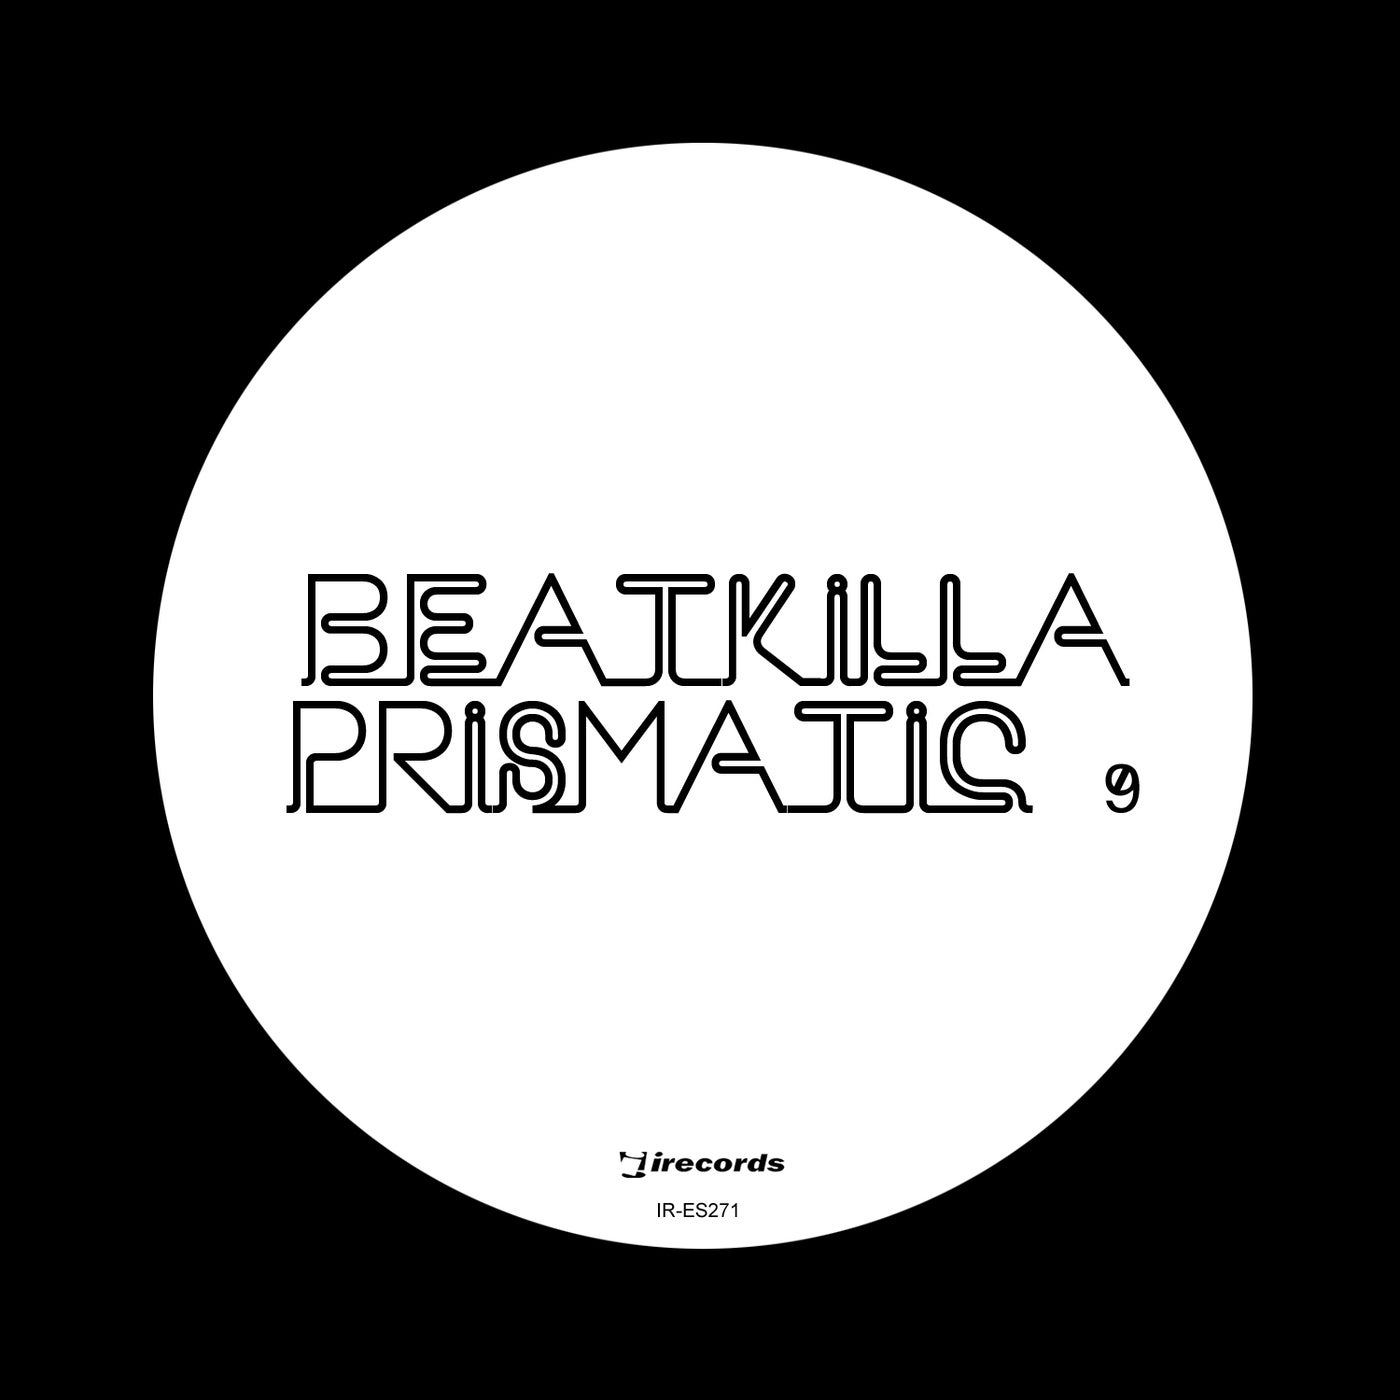 Beatkilla Prismatic 9